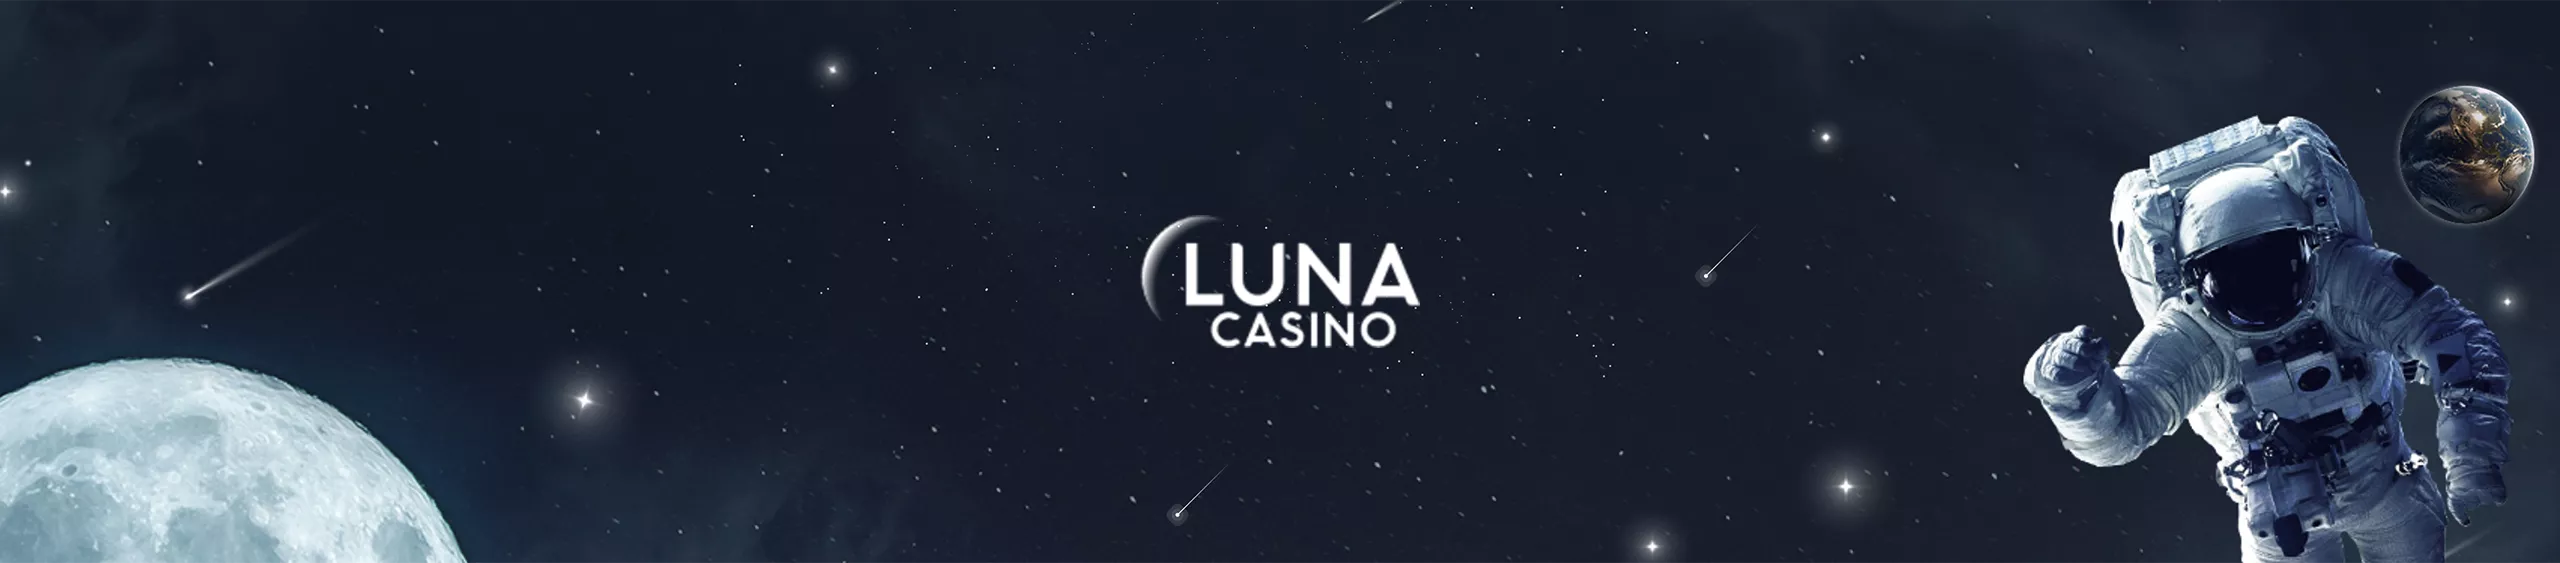 Luna Casino banner